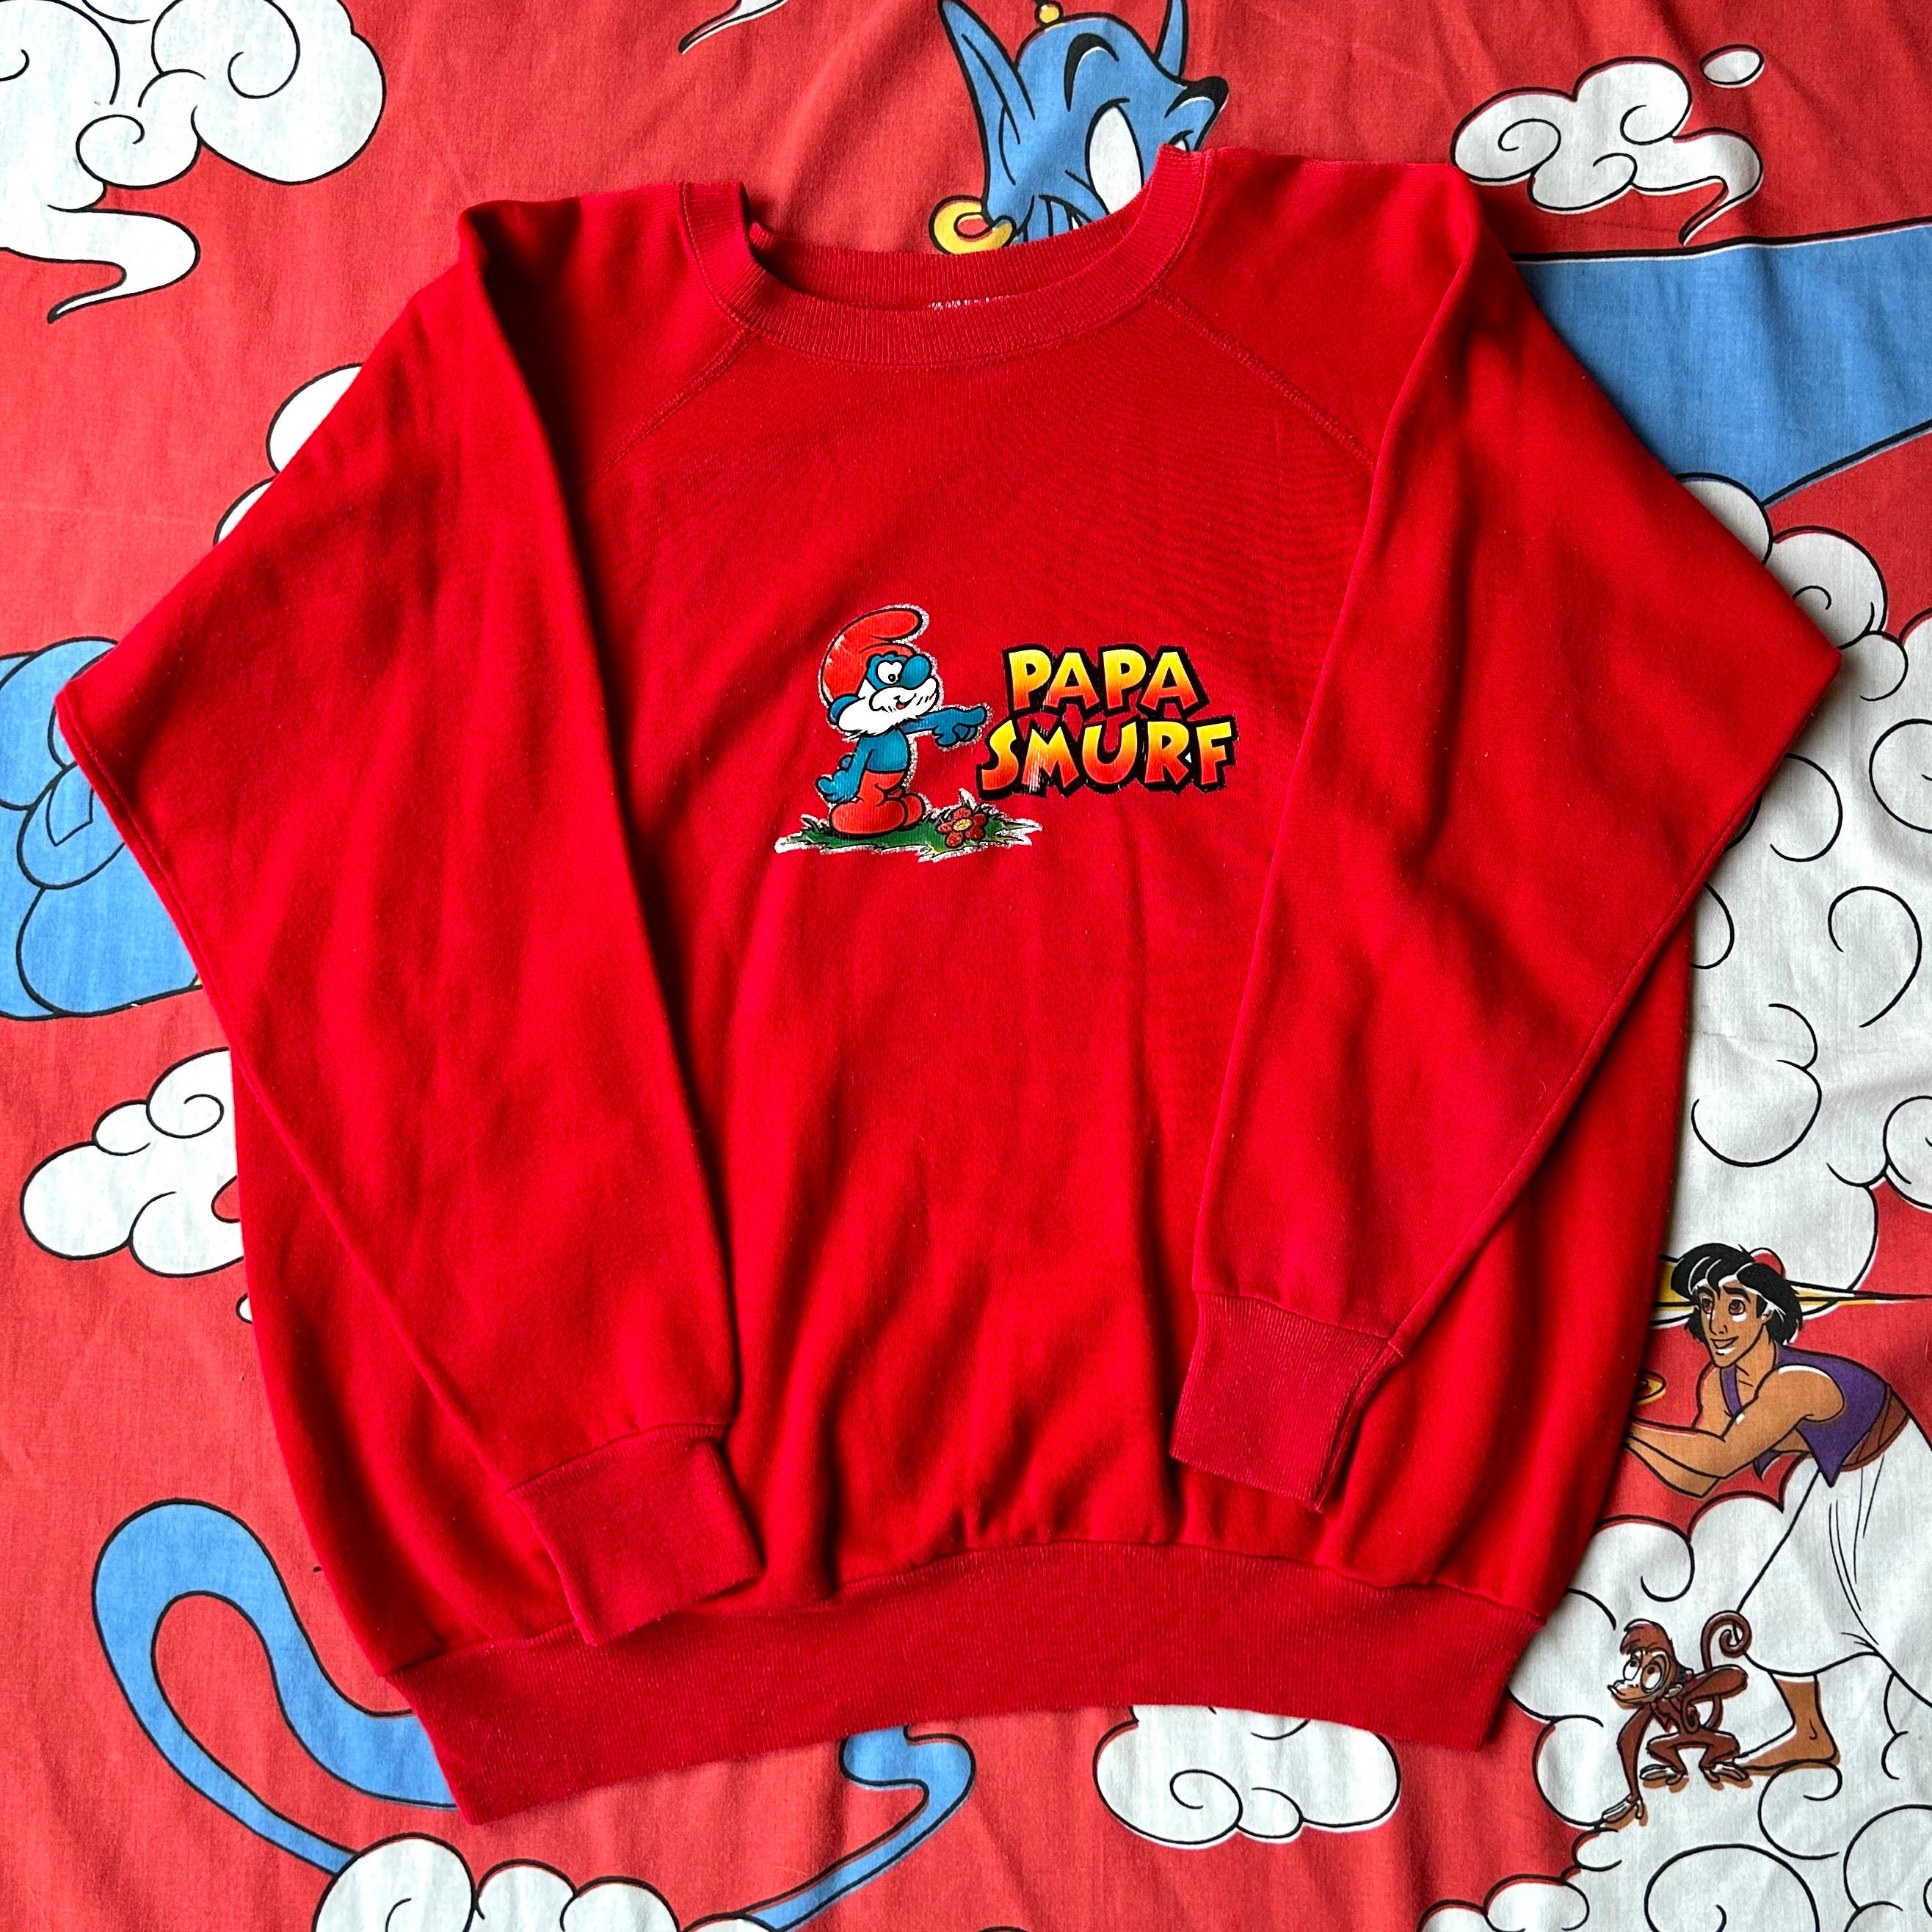 The Smurfs Embroidery Crew Neck Sweatshirt